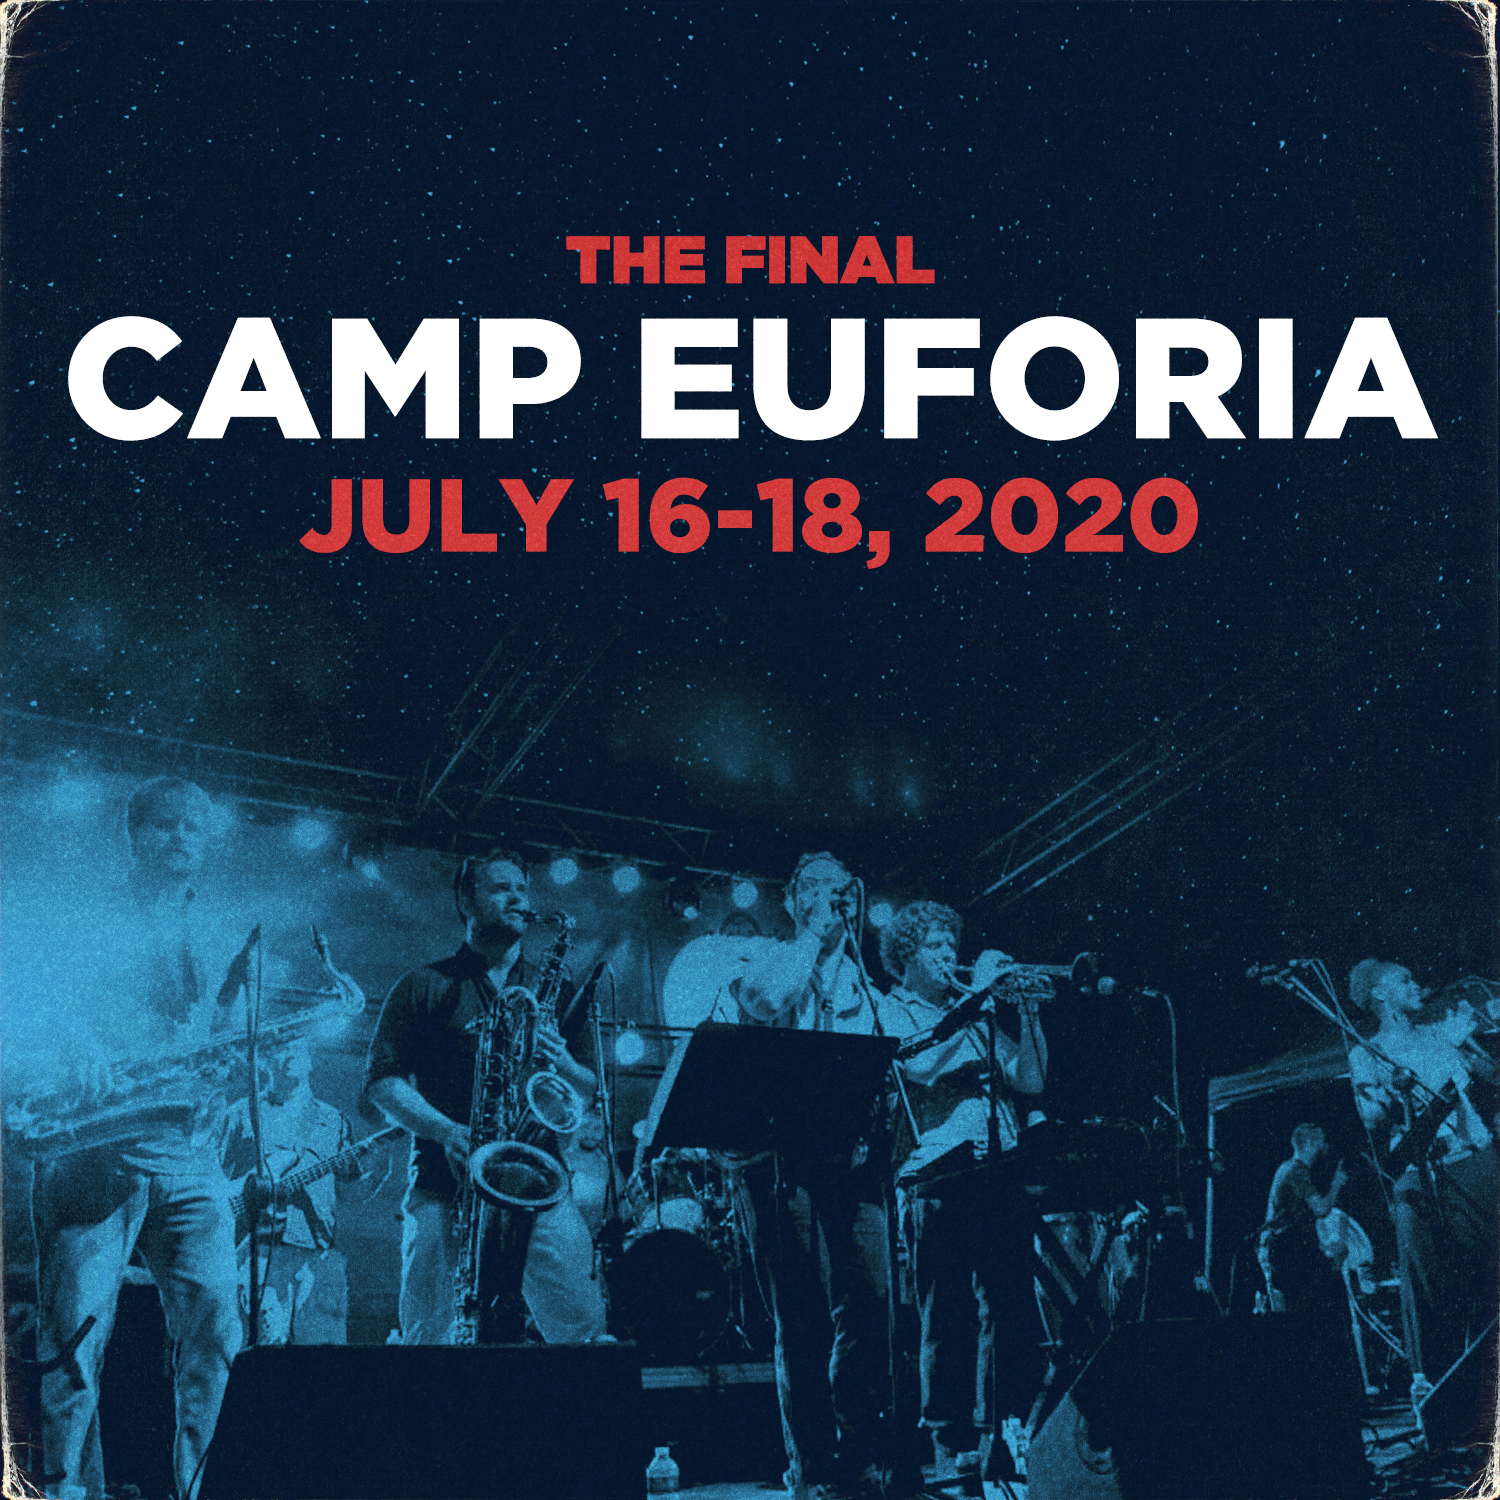 Camp Euforia Announces 2020 as Final Year for Festival